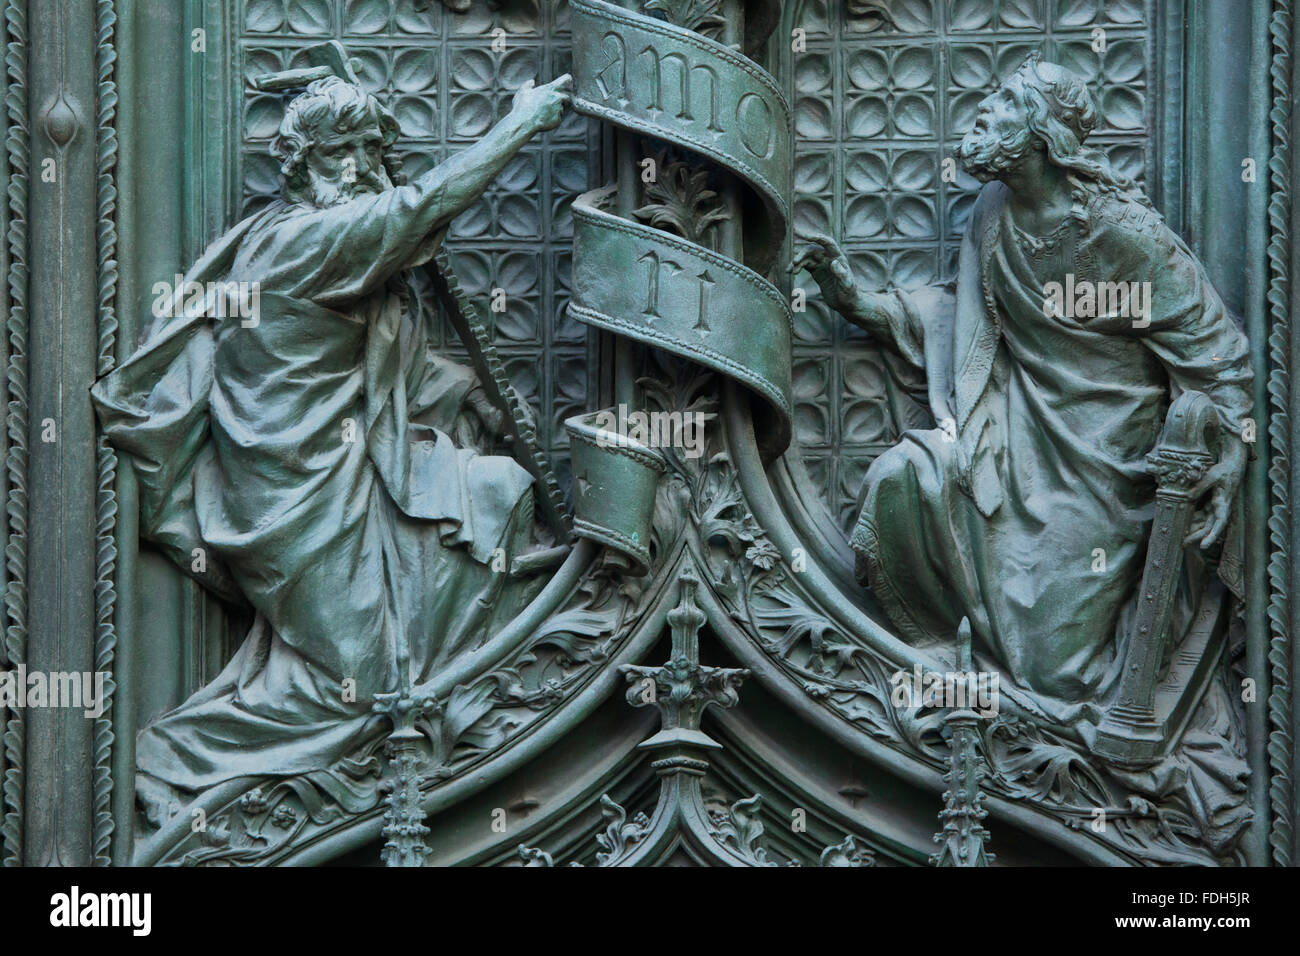 Saint Joseph and King David. Detail of the main bronze door of the Milan Cathedral (Duomo di Milano) in Milan, Italy. The bronze Stock Photo